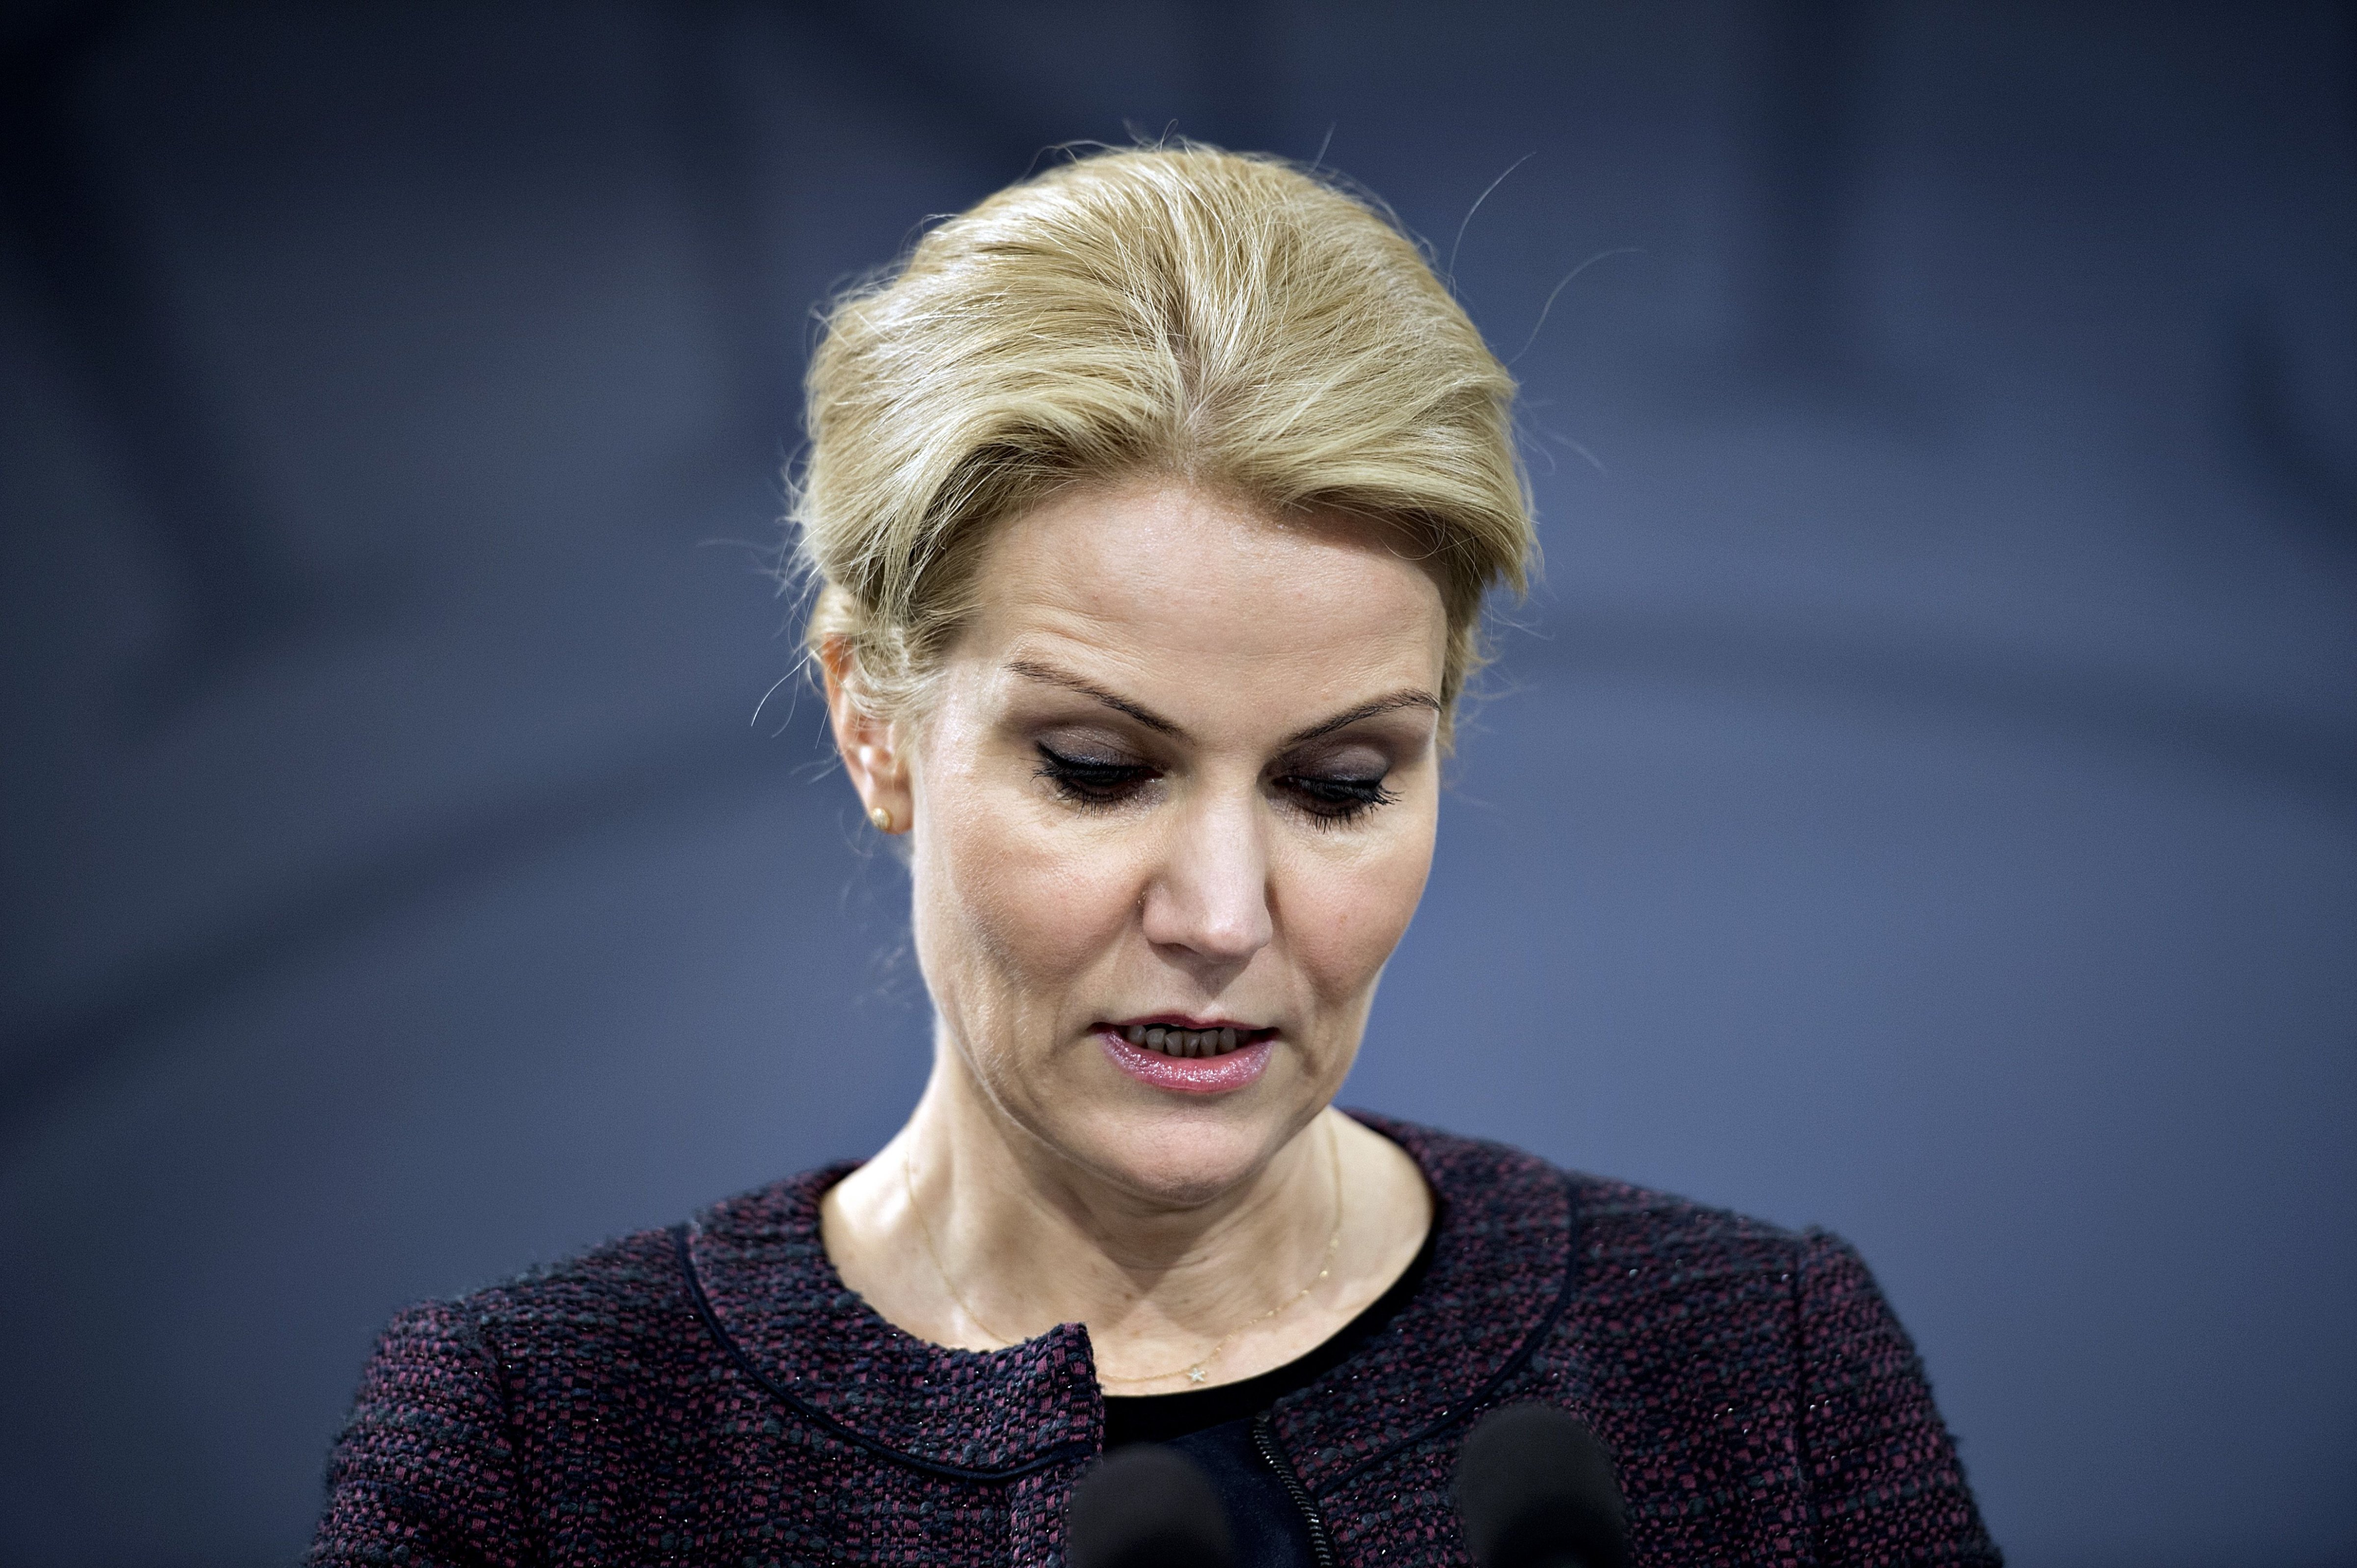 Danish Prime Minister Helle Thorning-Schmidt at a press conference on Jan. 30, 2014 at the Prime Minister's office in Copenhagen. (Keld Navntoft / AFP / Getty Images)